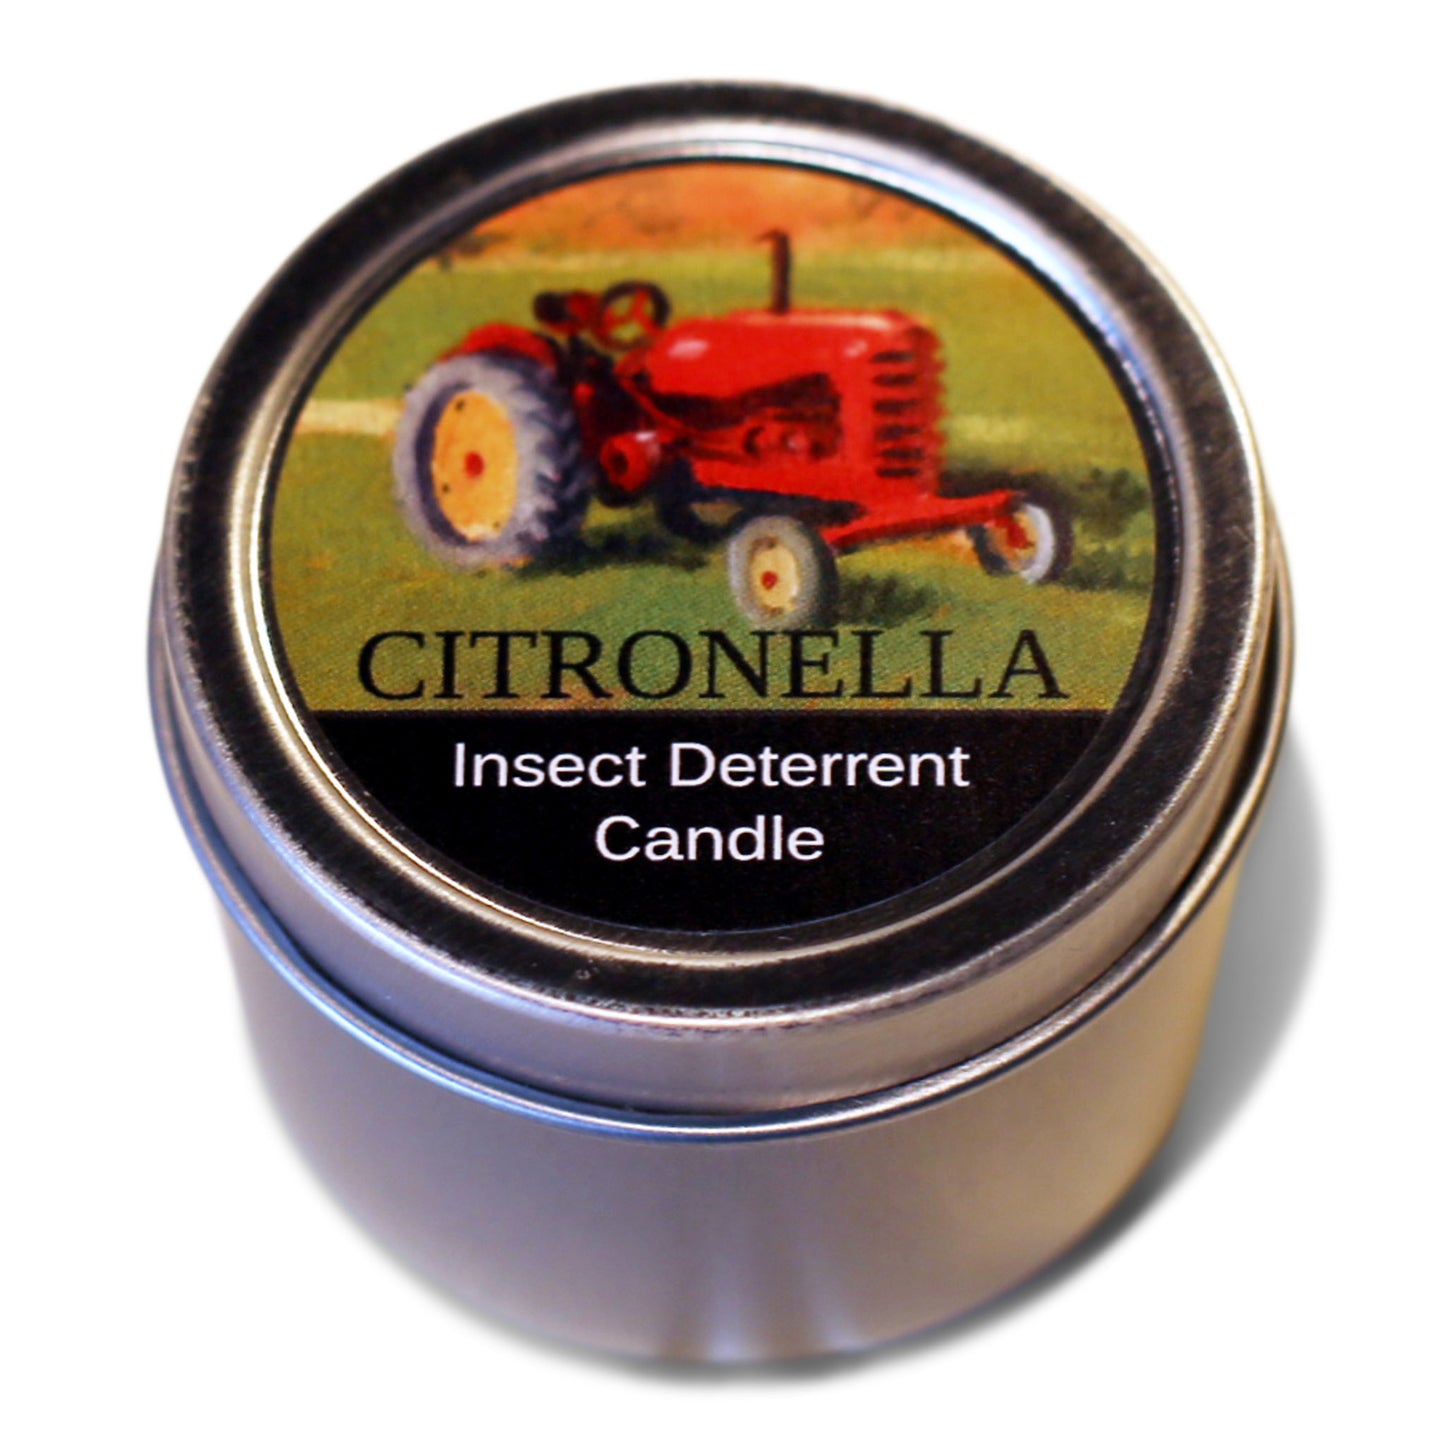 NEW Gardener's Citronella Candle